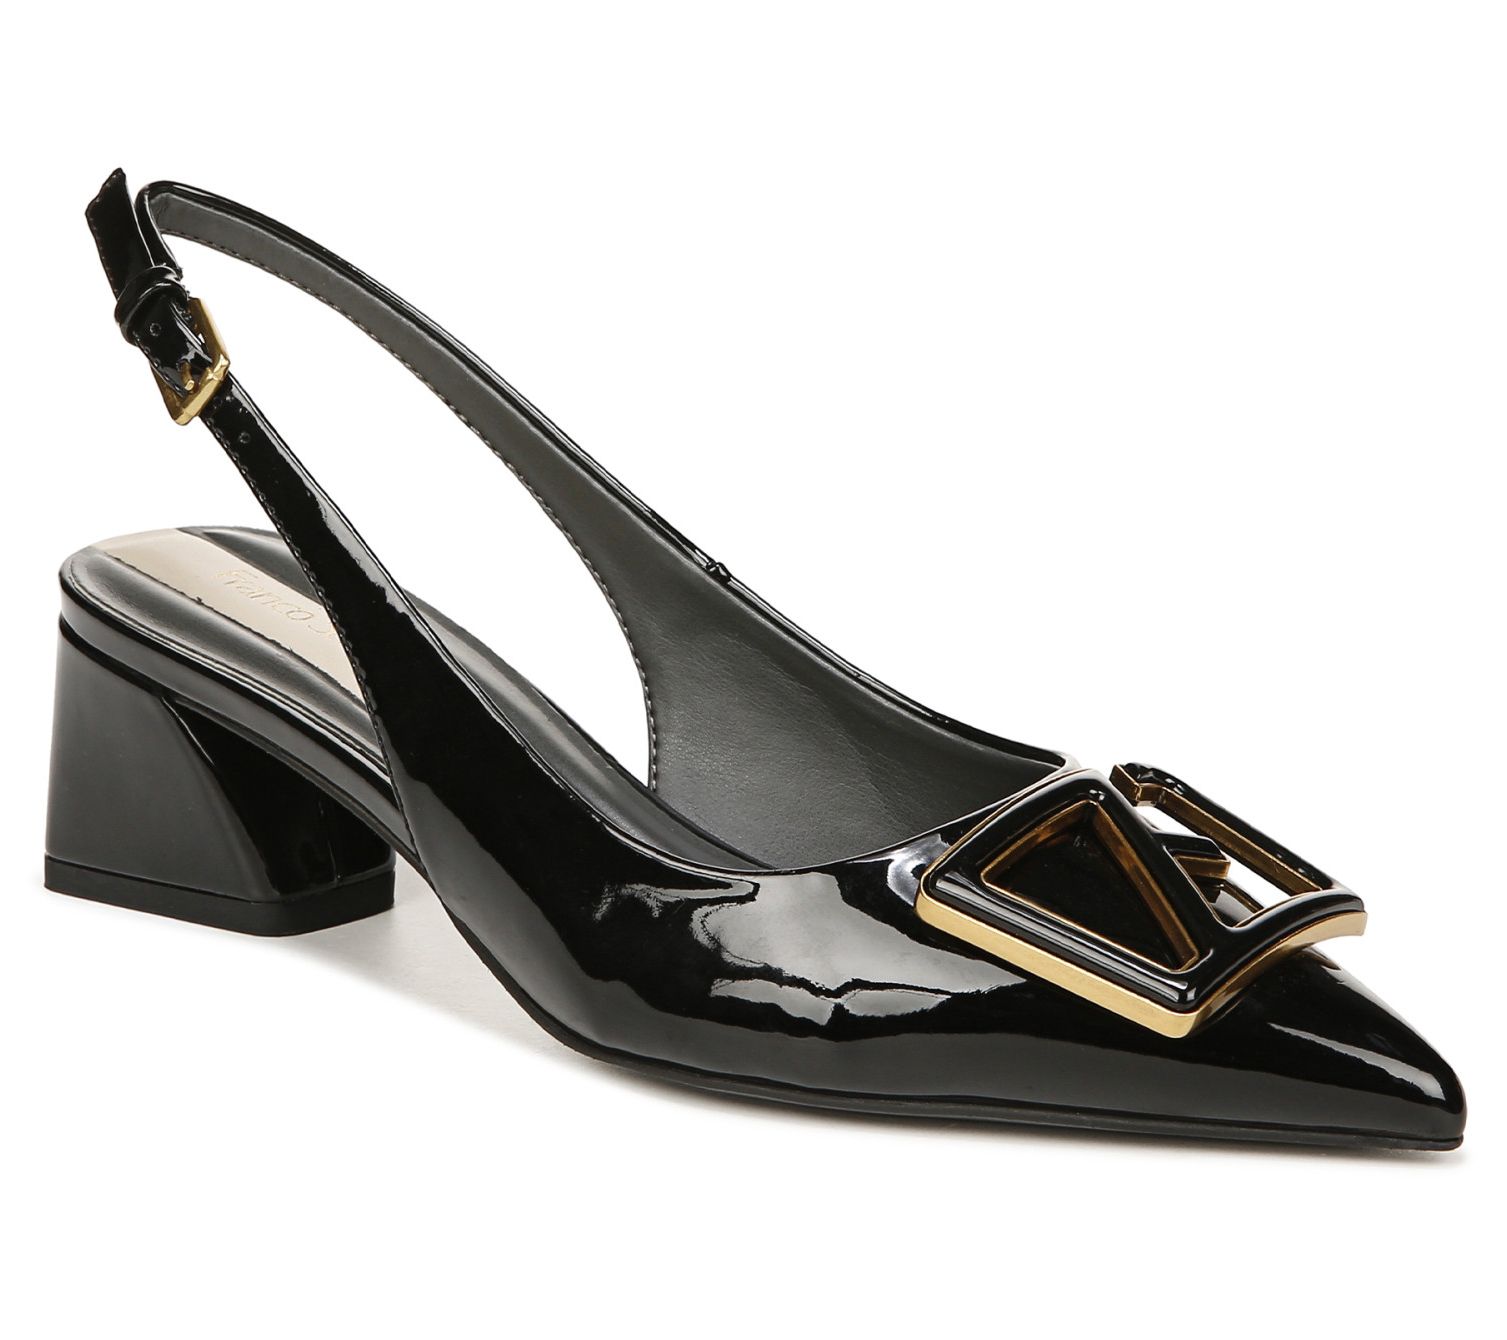 Louis Vuitton Black Patent Leather Madeleine Logo Block Heel Pumps Size 40